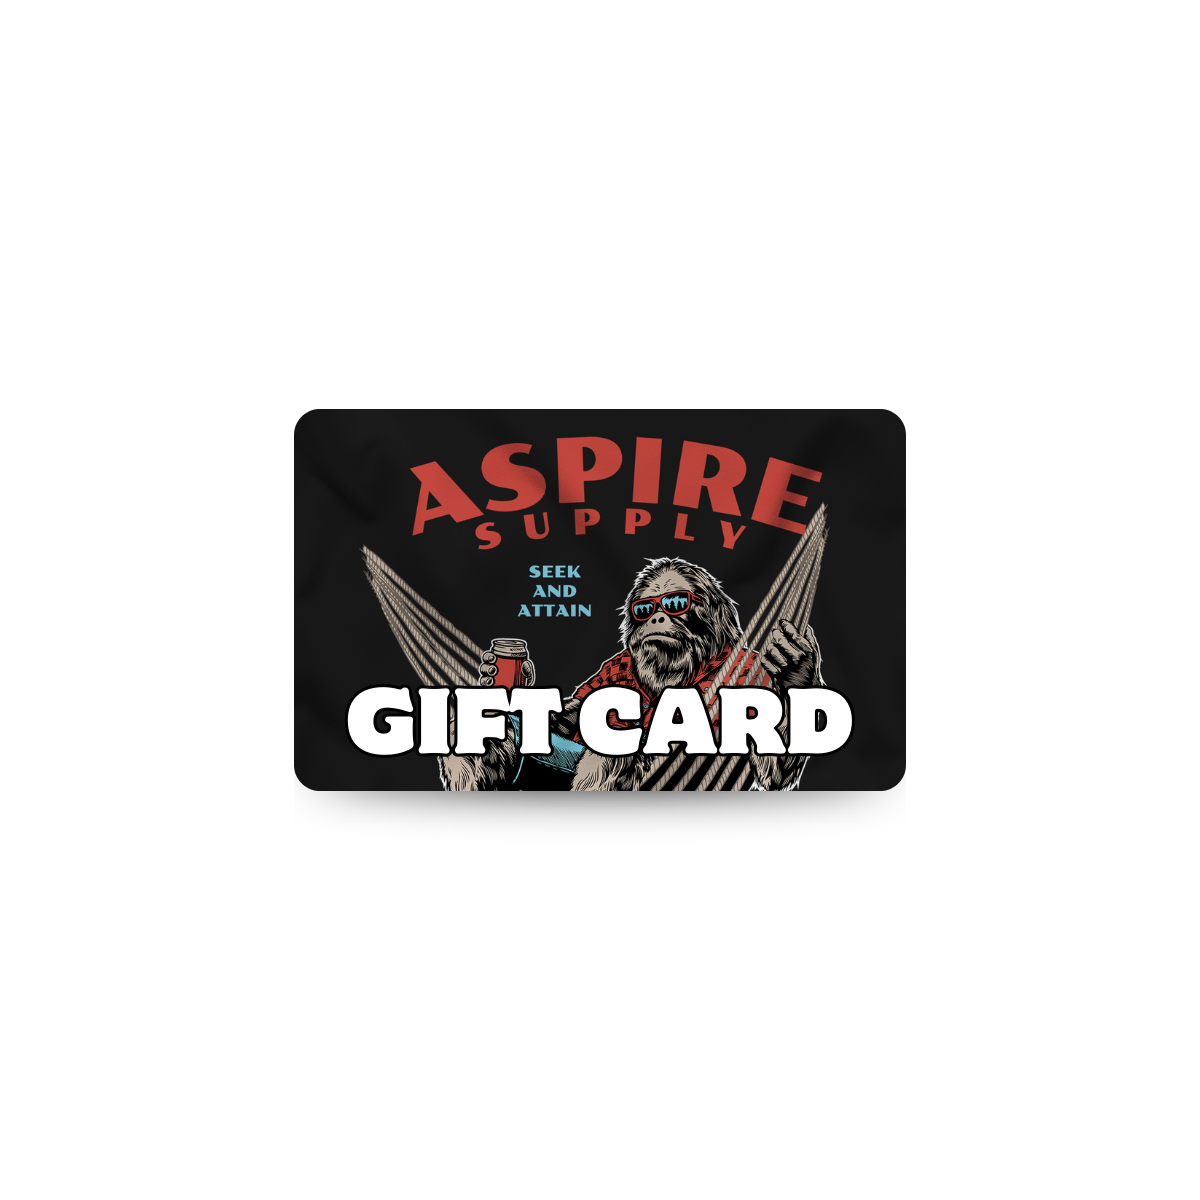 Aspire Supply Gift Card